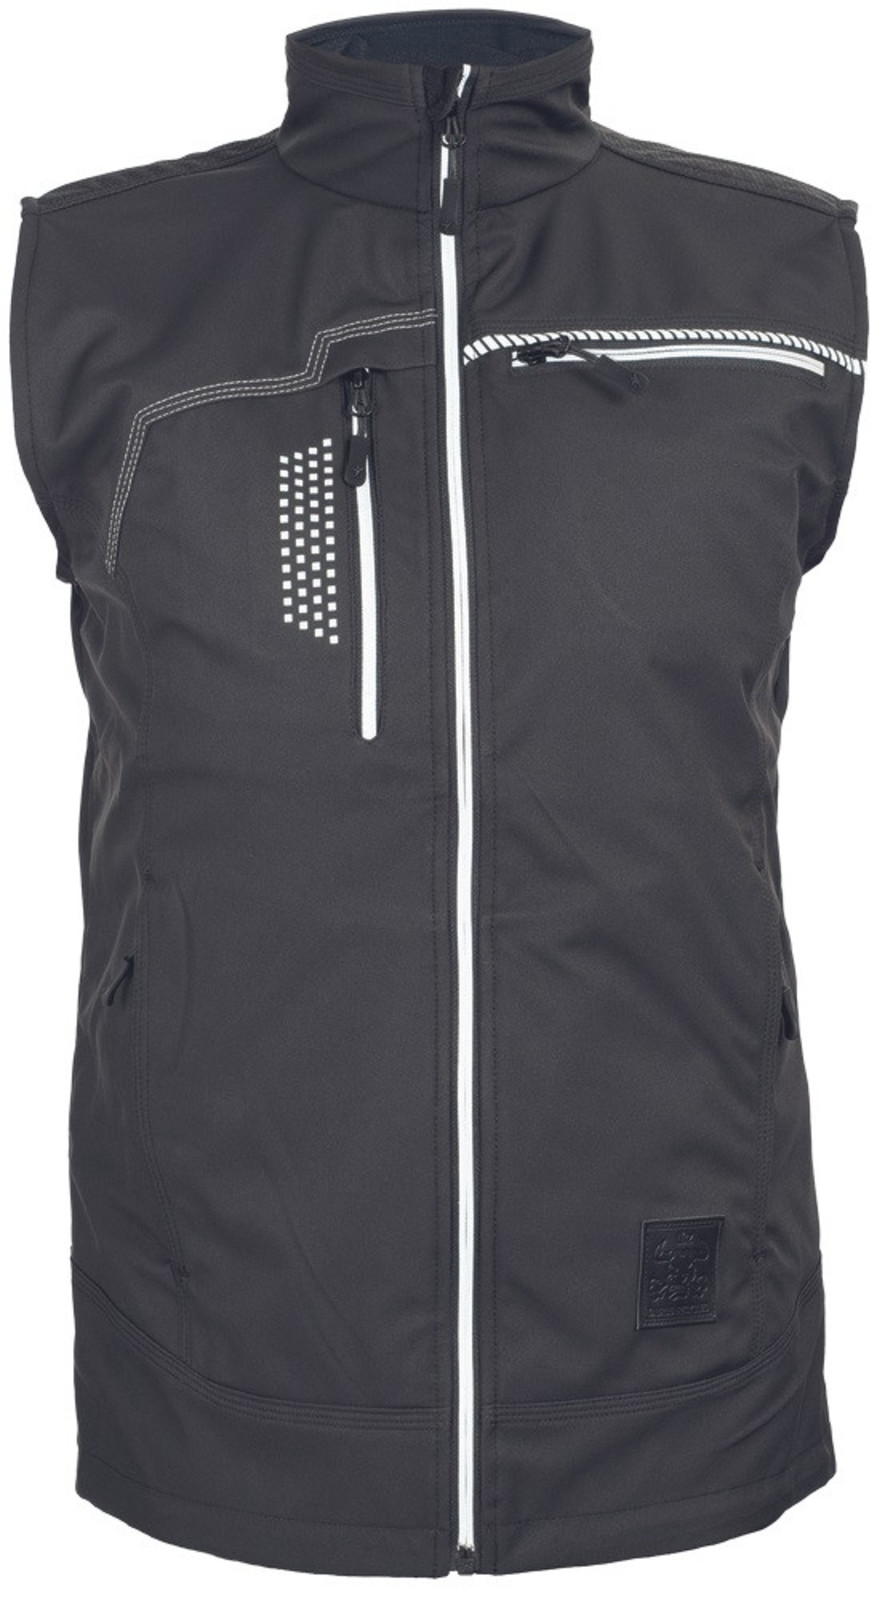 Unisex softshellová vesta Cerva Taurus Litz GRS - veľkosť: XL, farba: čierna